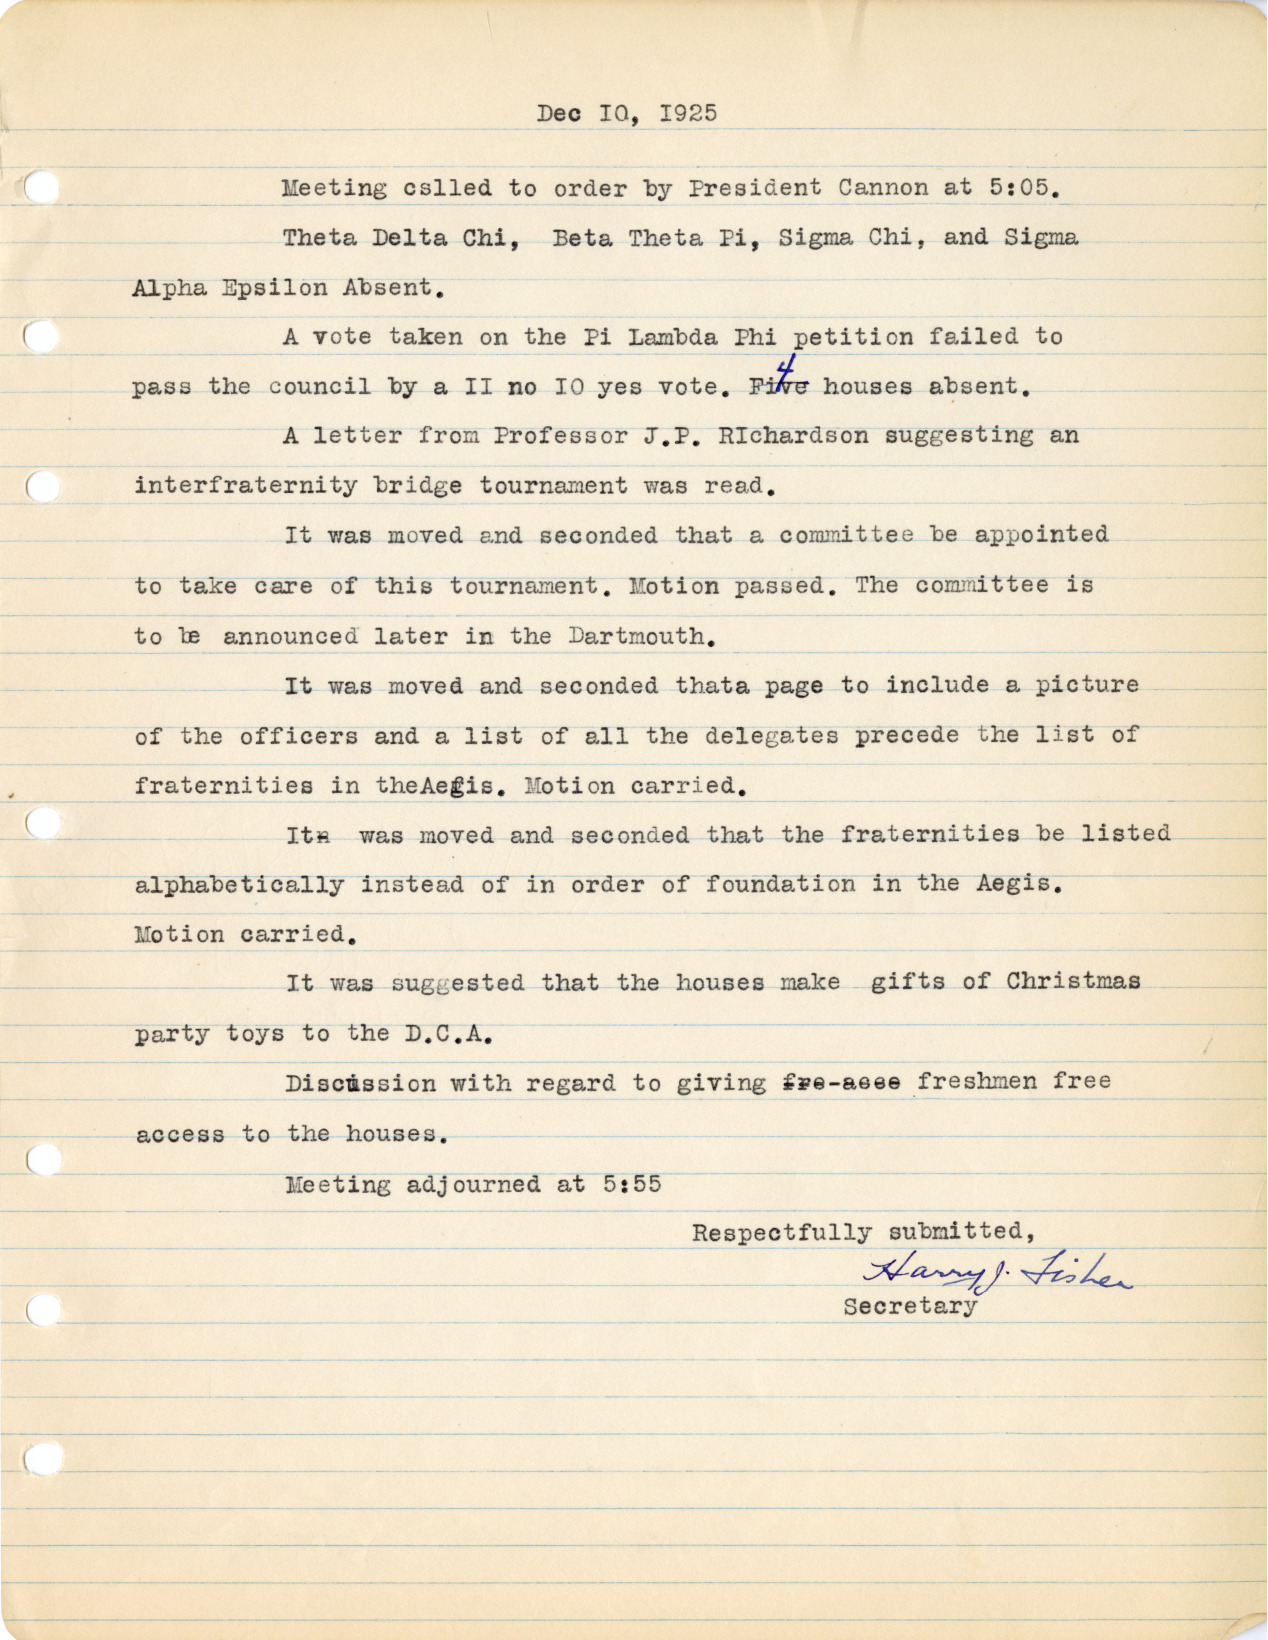 December 10, 1925 IFC Meeting Minutes